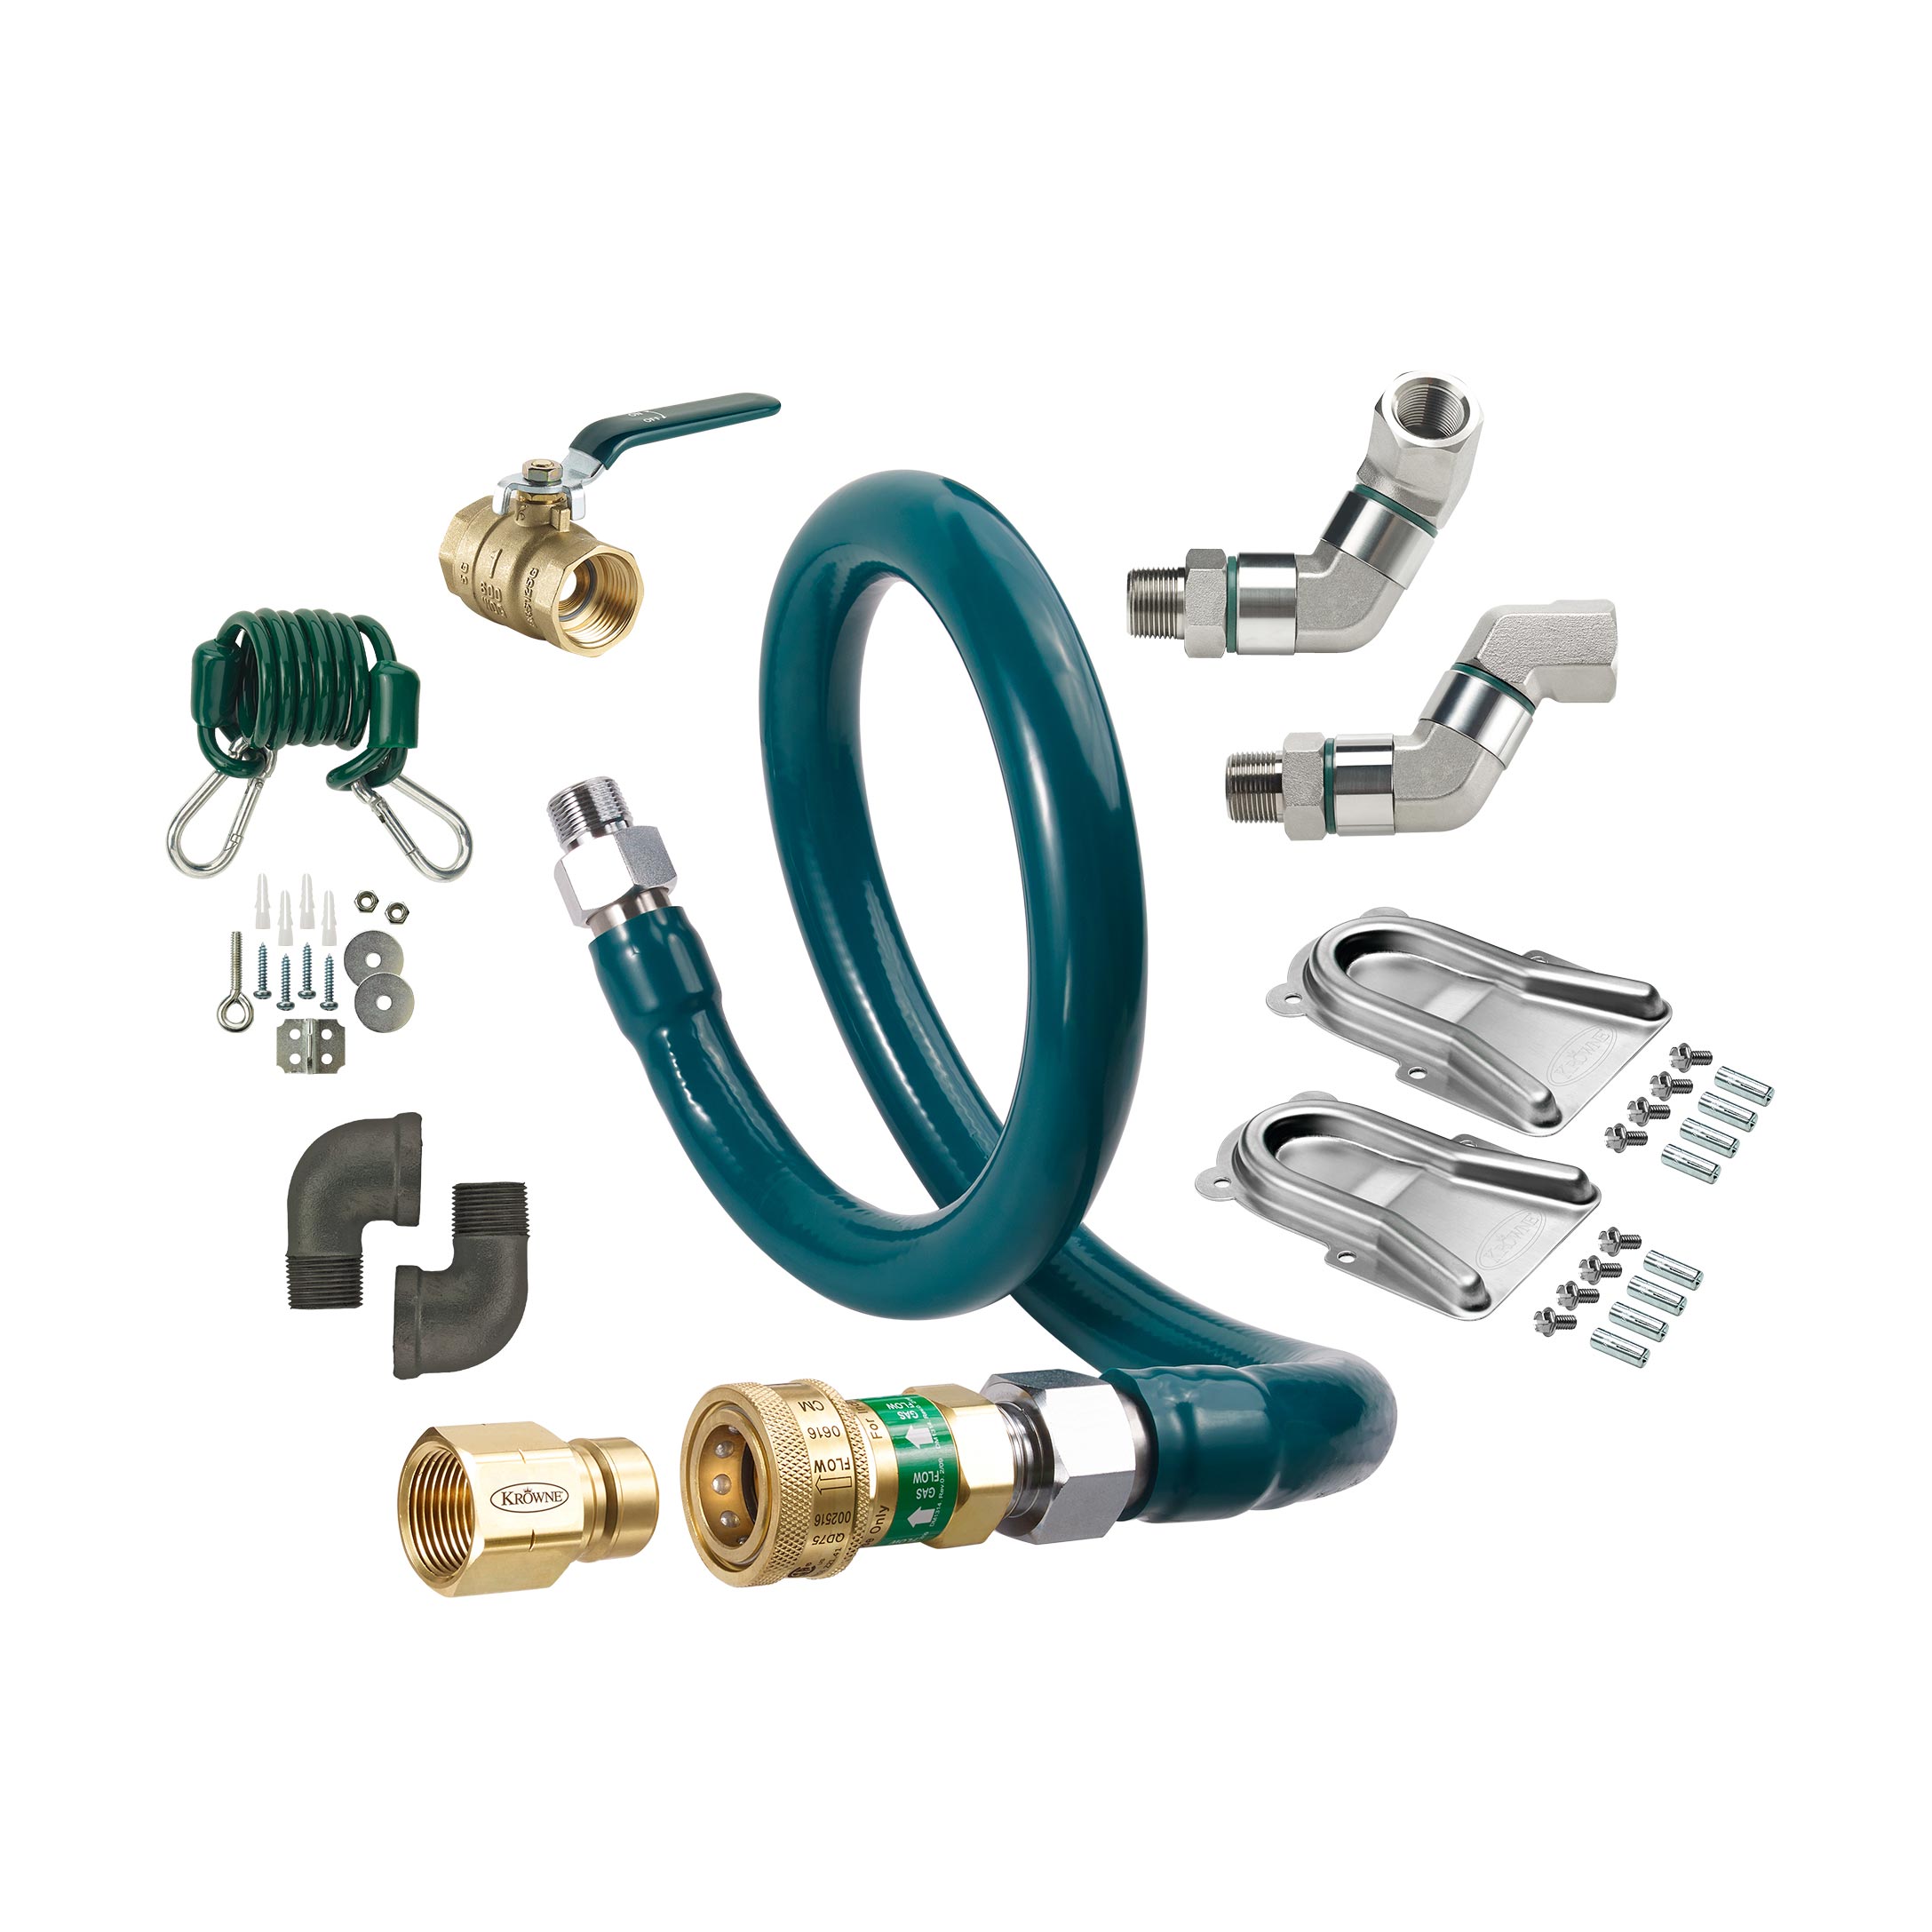 Krowne M10060K12 Gas Connector Hose Kit / Assembly